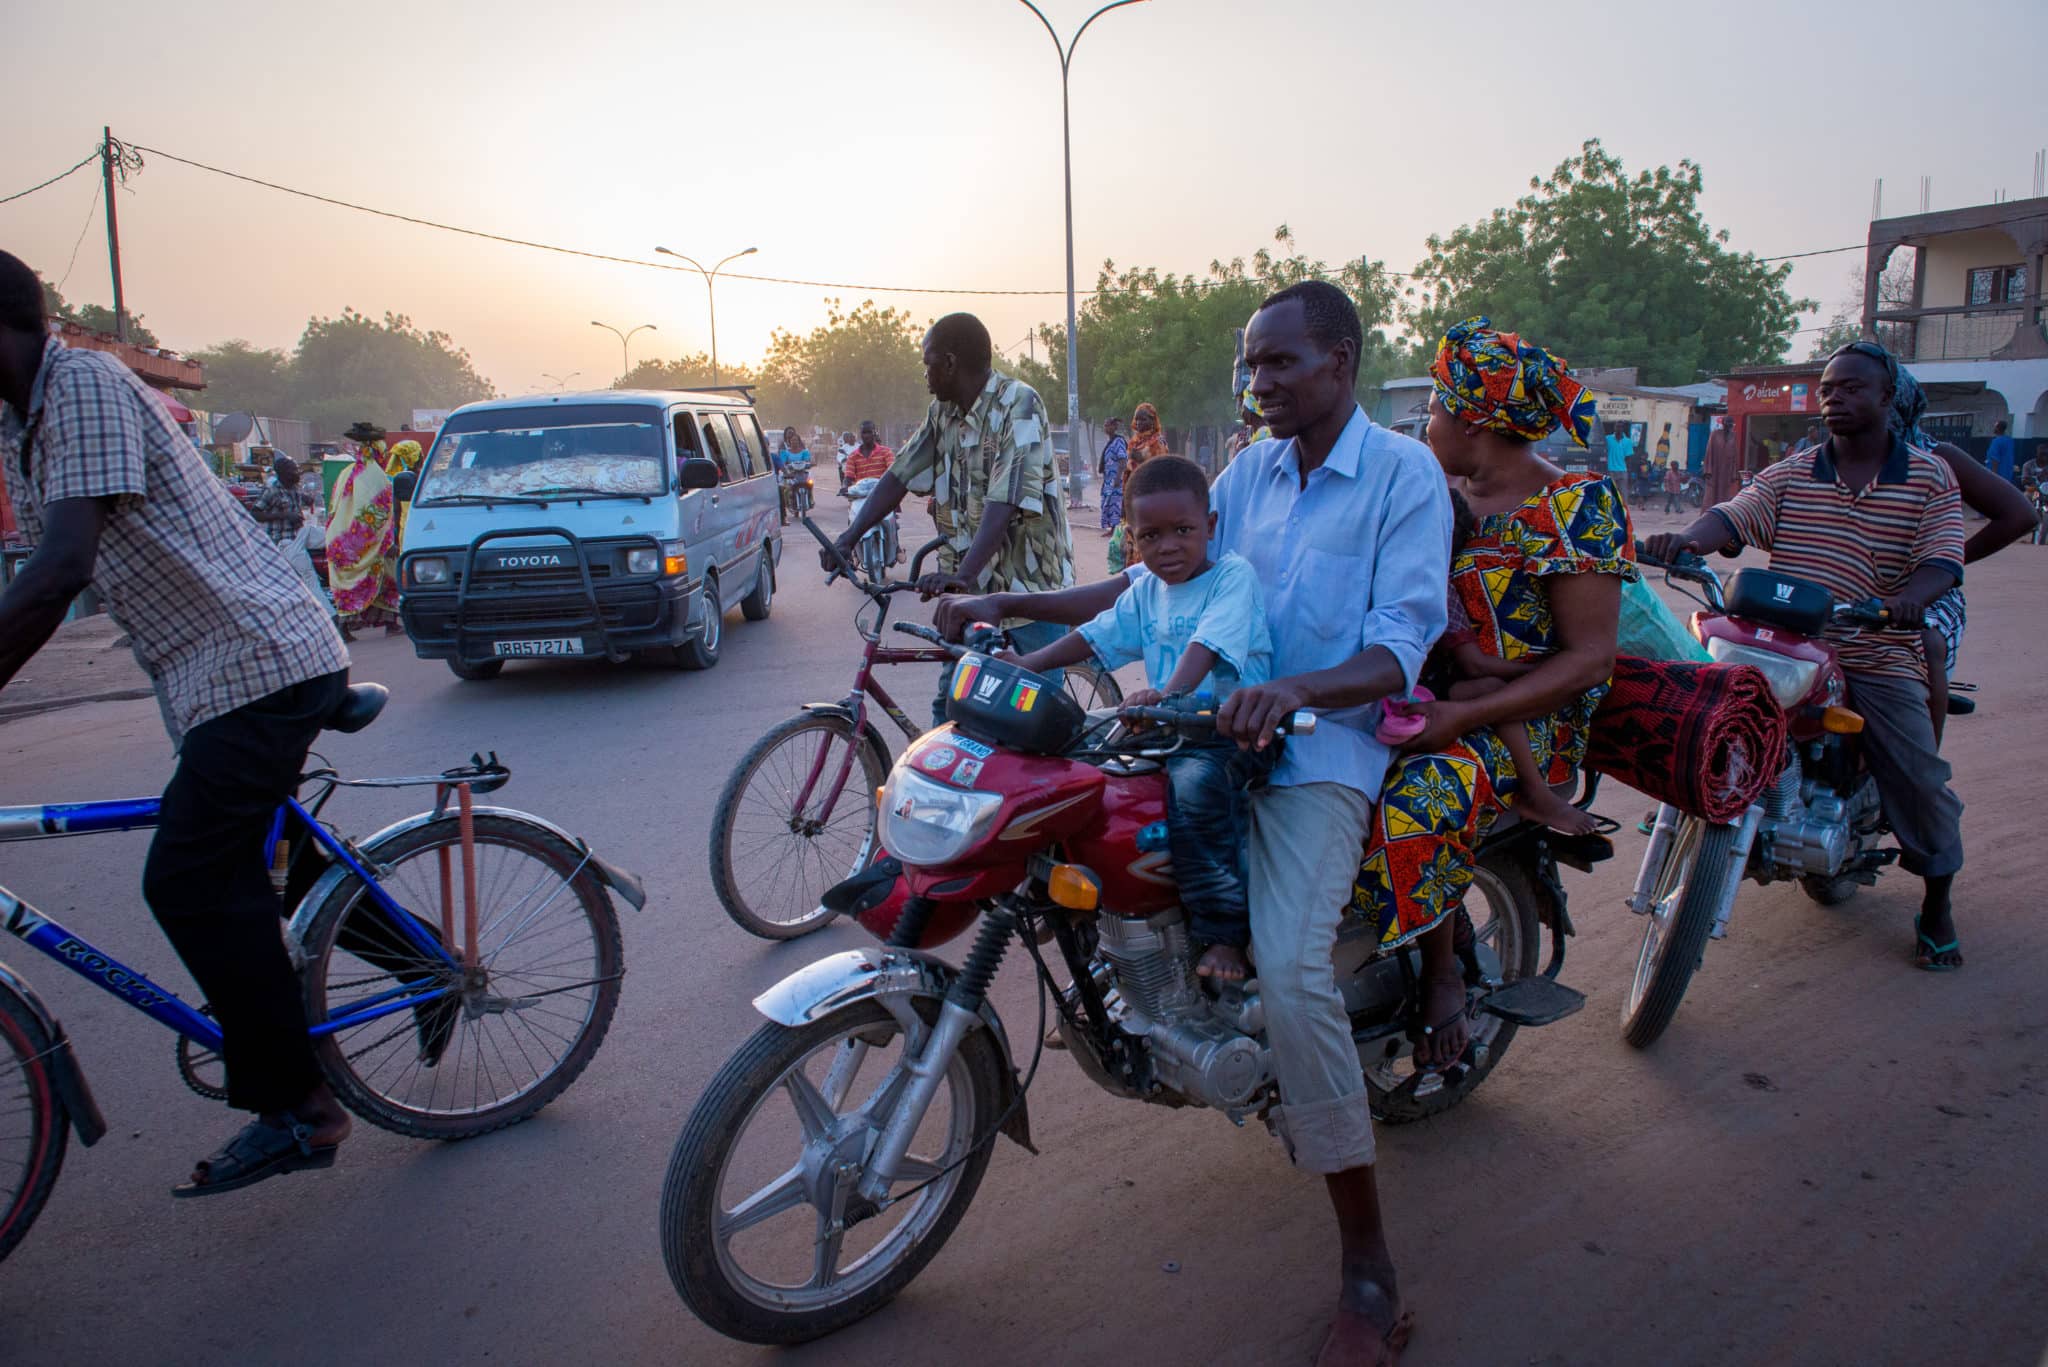 Traffic in downtown N’Djamena, Chad. (Photo: Arne Hoel)